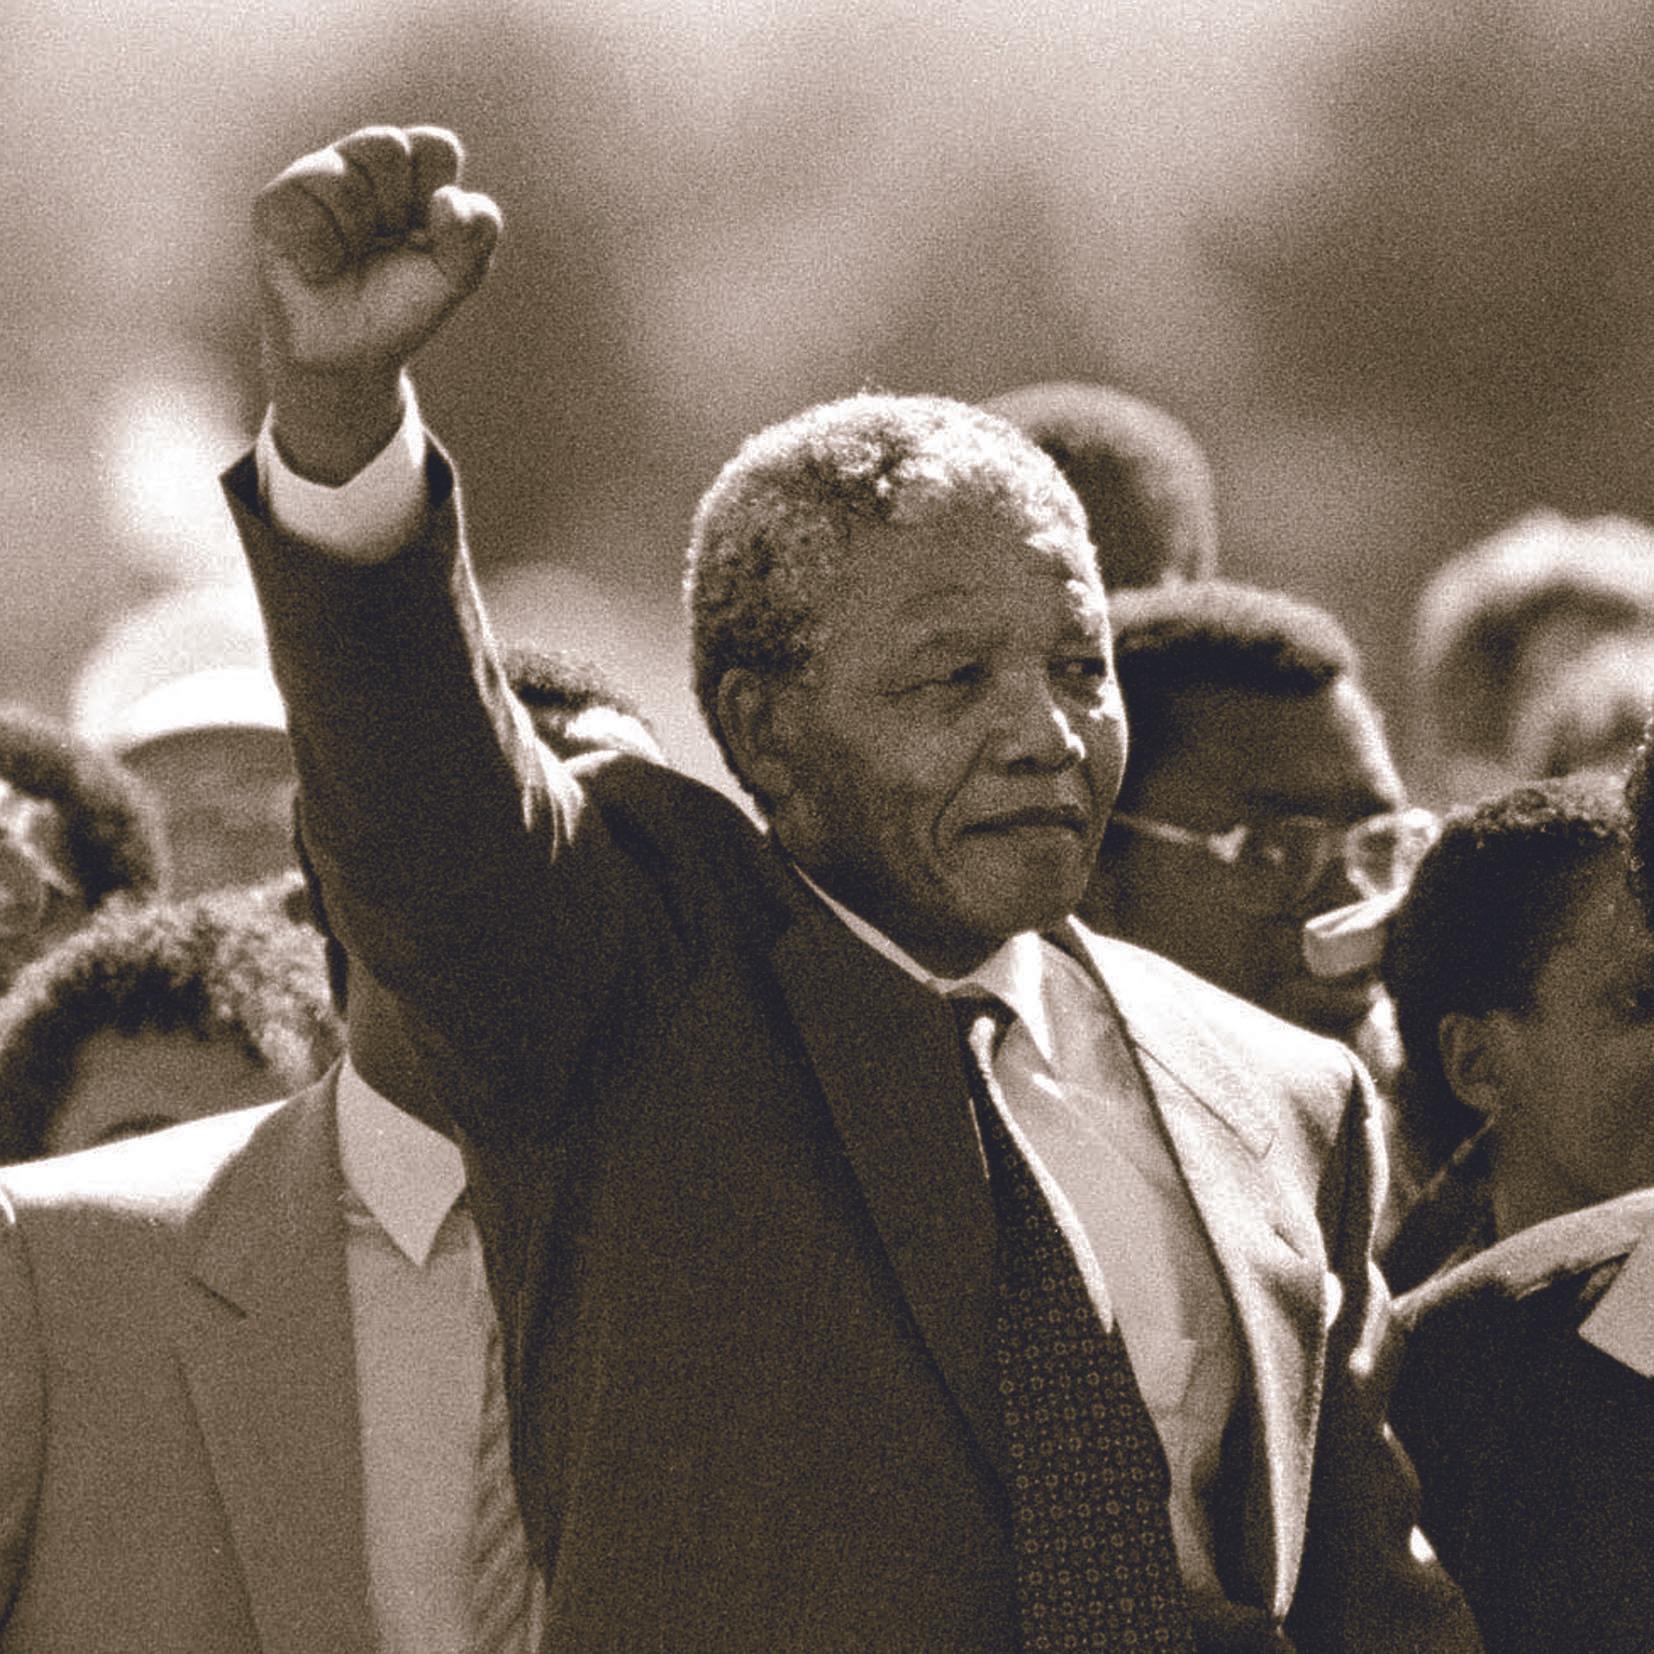 Thumbnail for "Mandela: An Audio History".